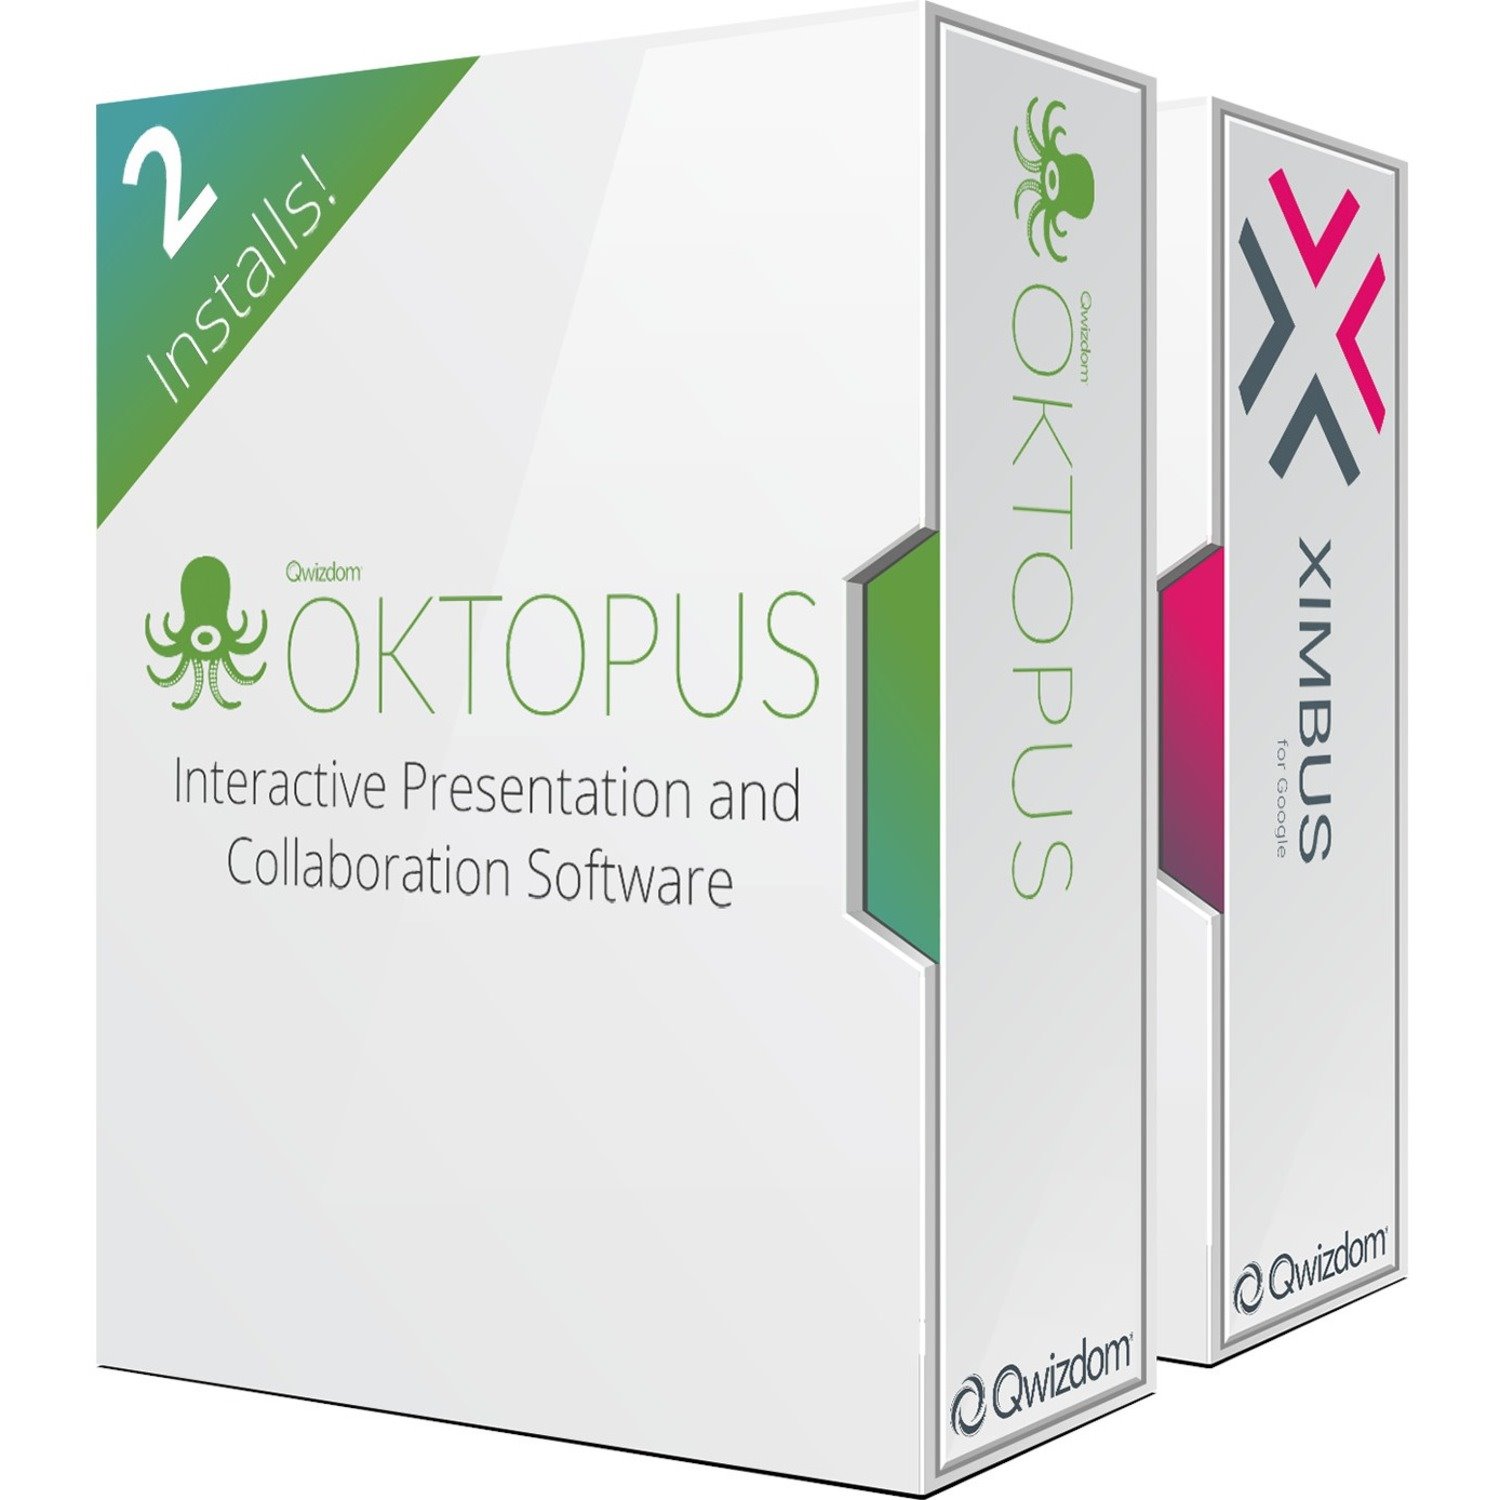 ViewSonic Qwizdom Ximbus with Qwizdom Oktopus (2 installs) - Box Pack - 1 License